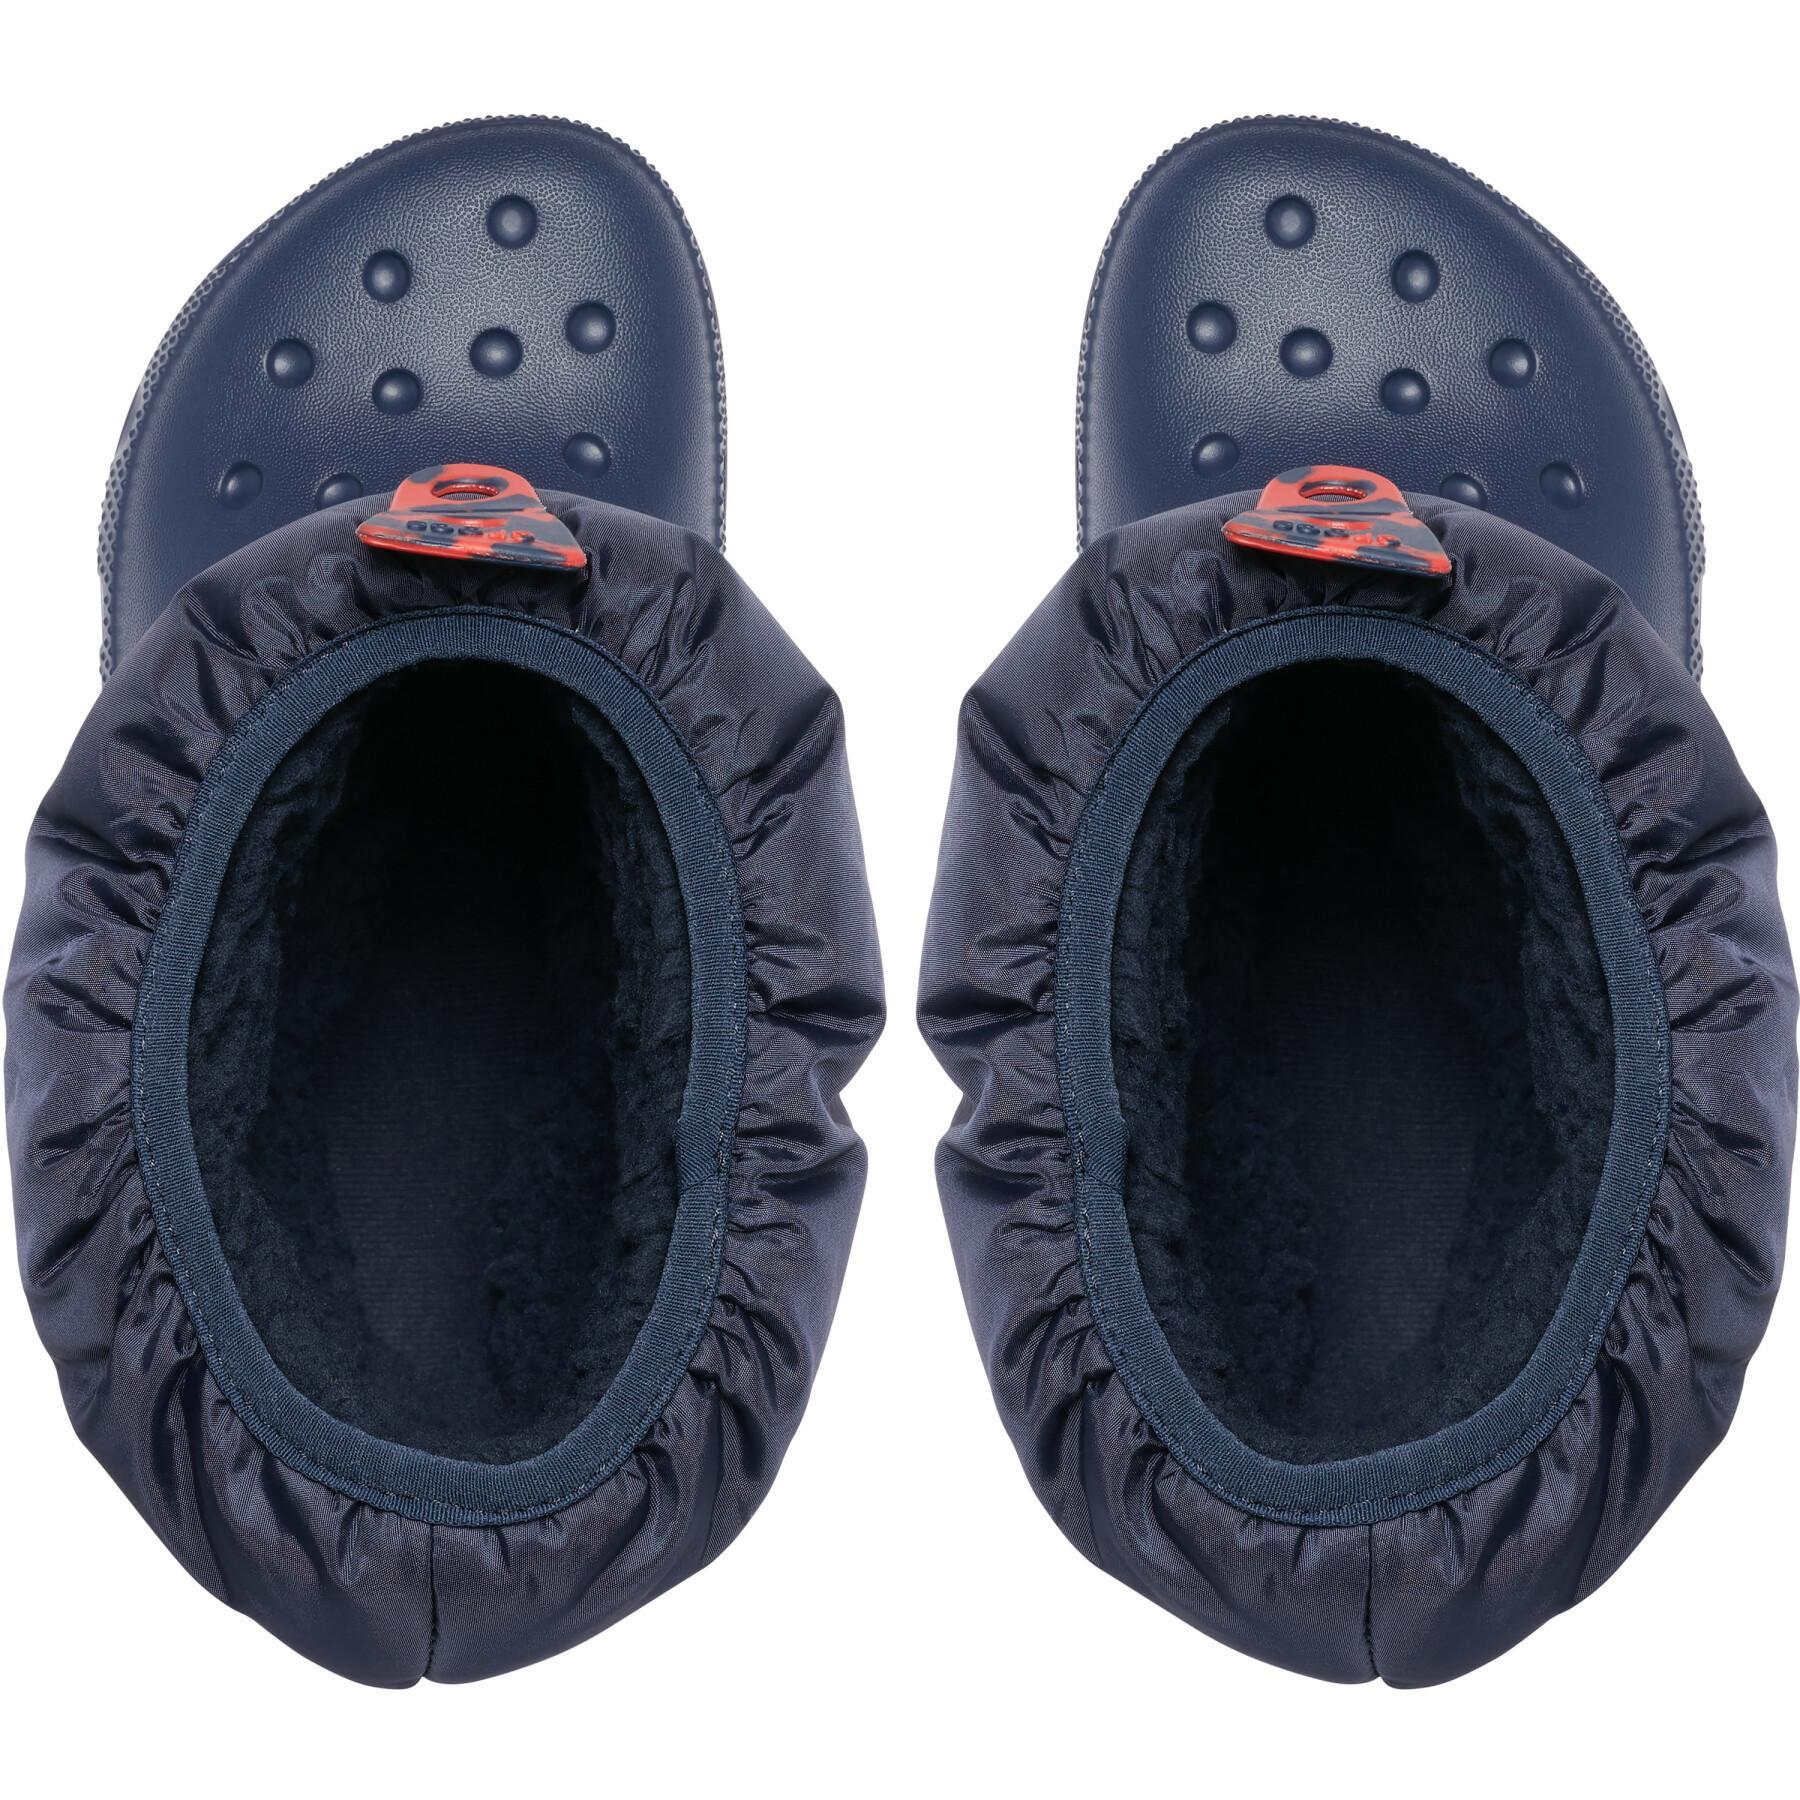 Baby clogs Crocs Classic Neo